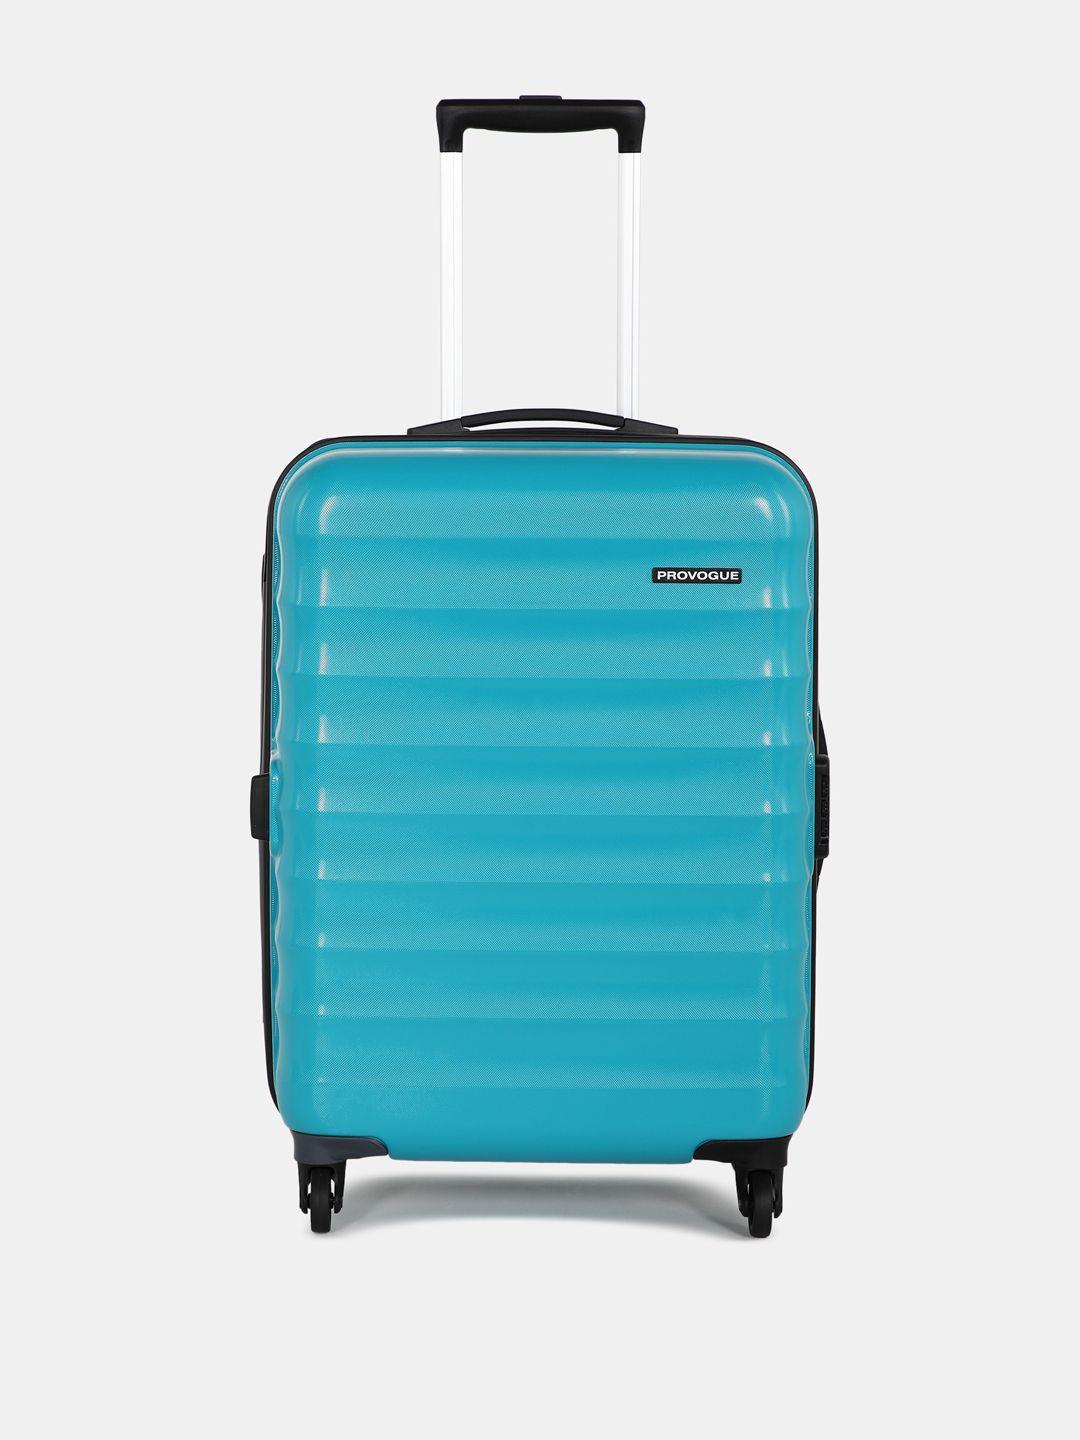 provogue textured medium trolley suitcase